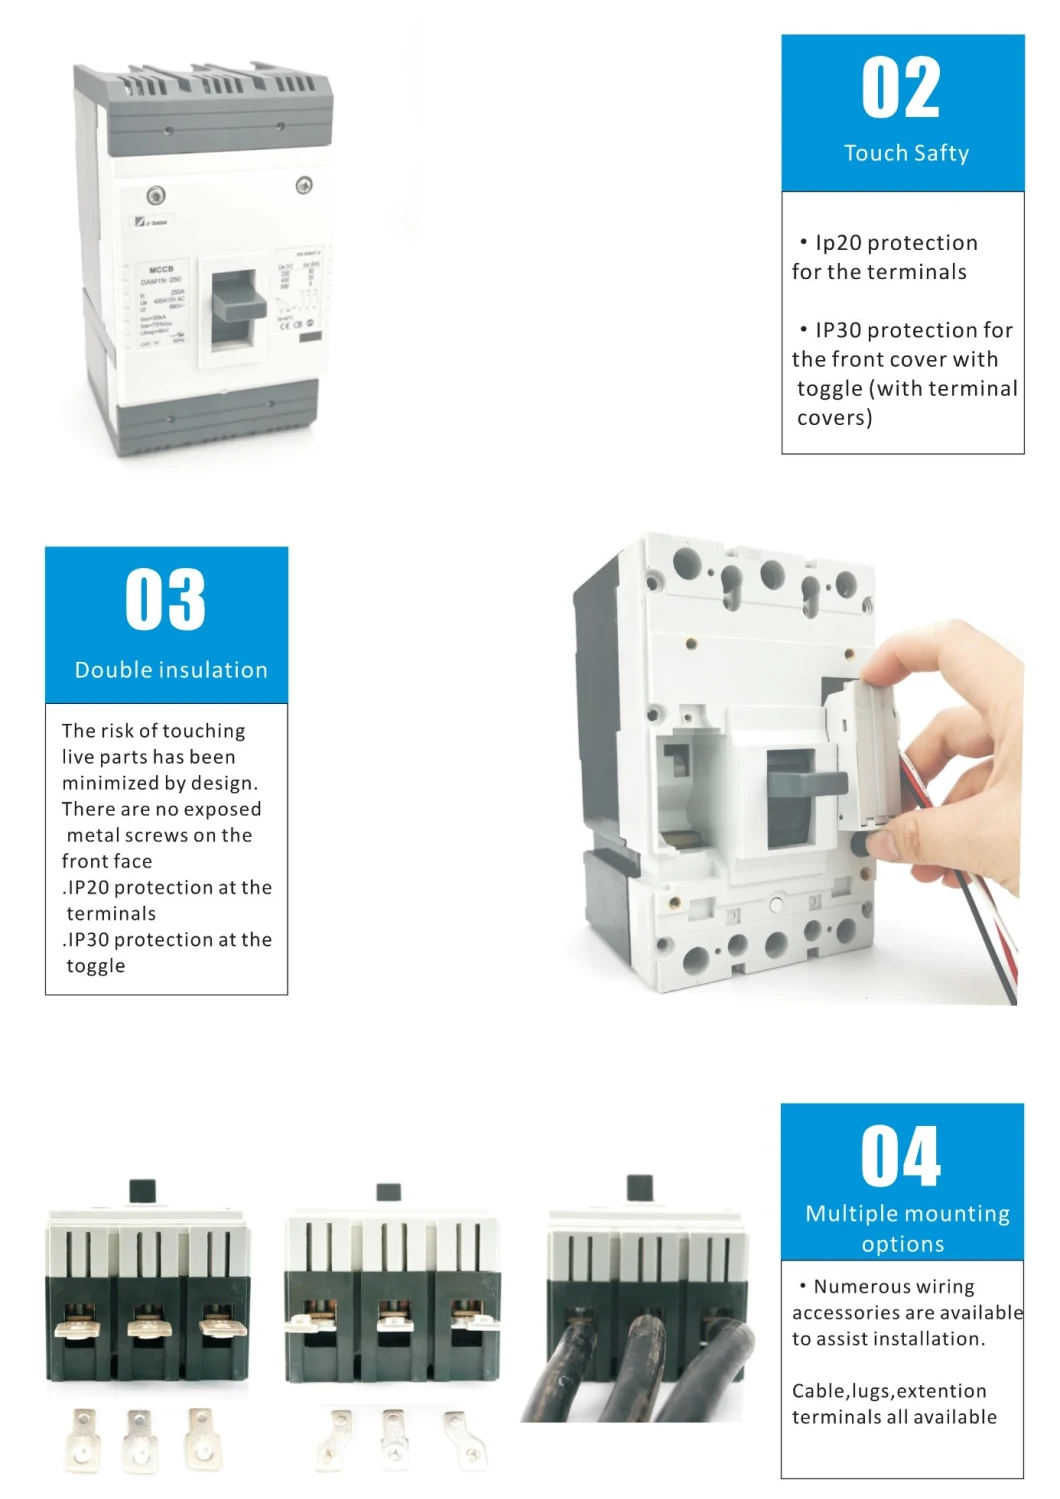 Dam1-630 3p Thermal Adjustable Molded Case Circuit Breaker MCCB